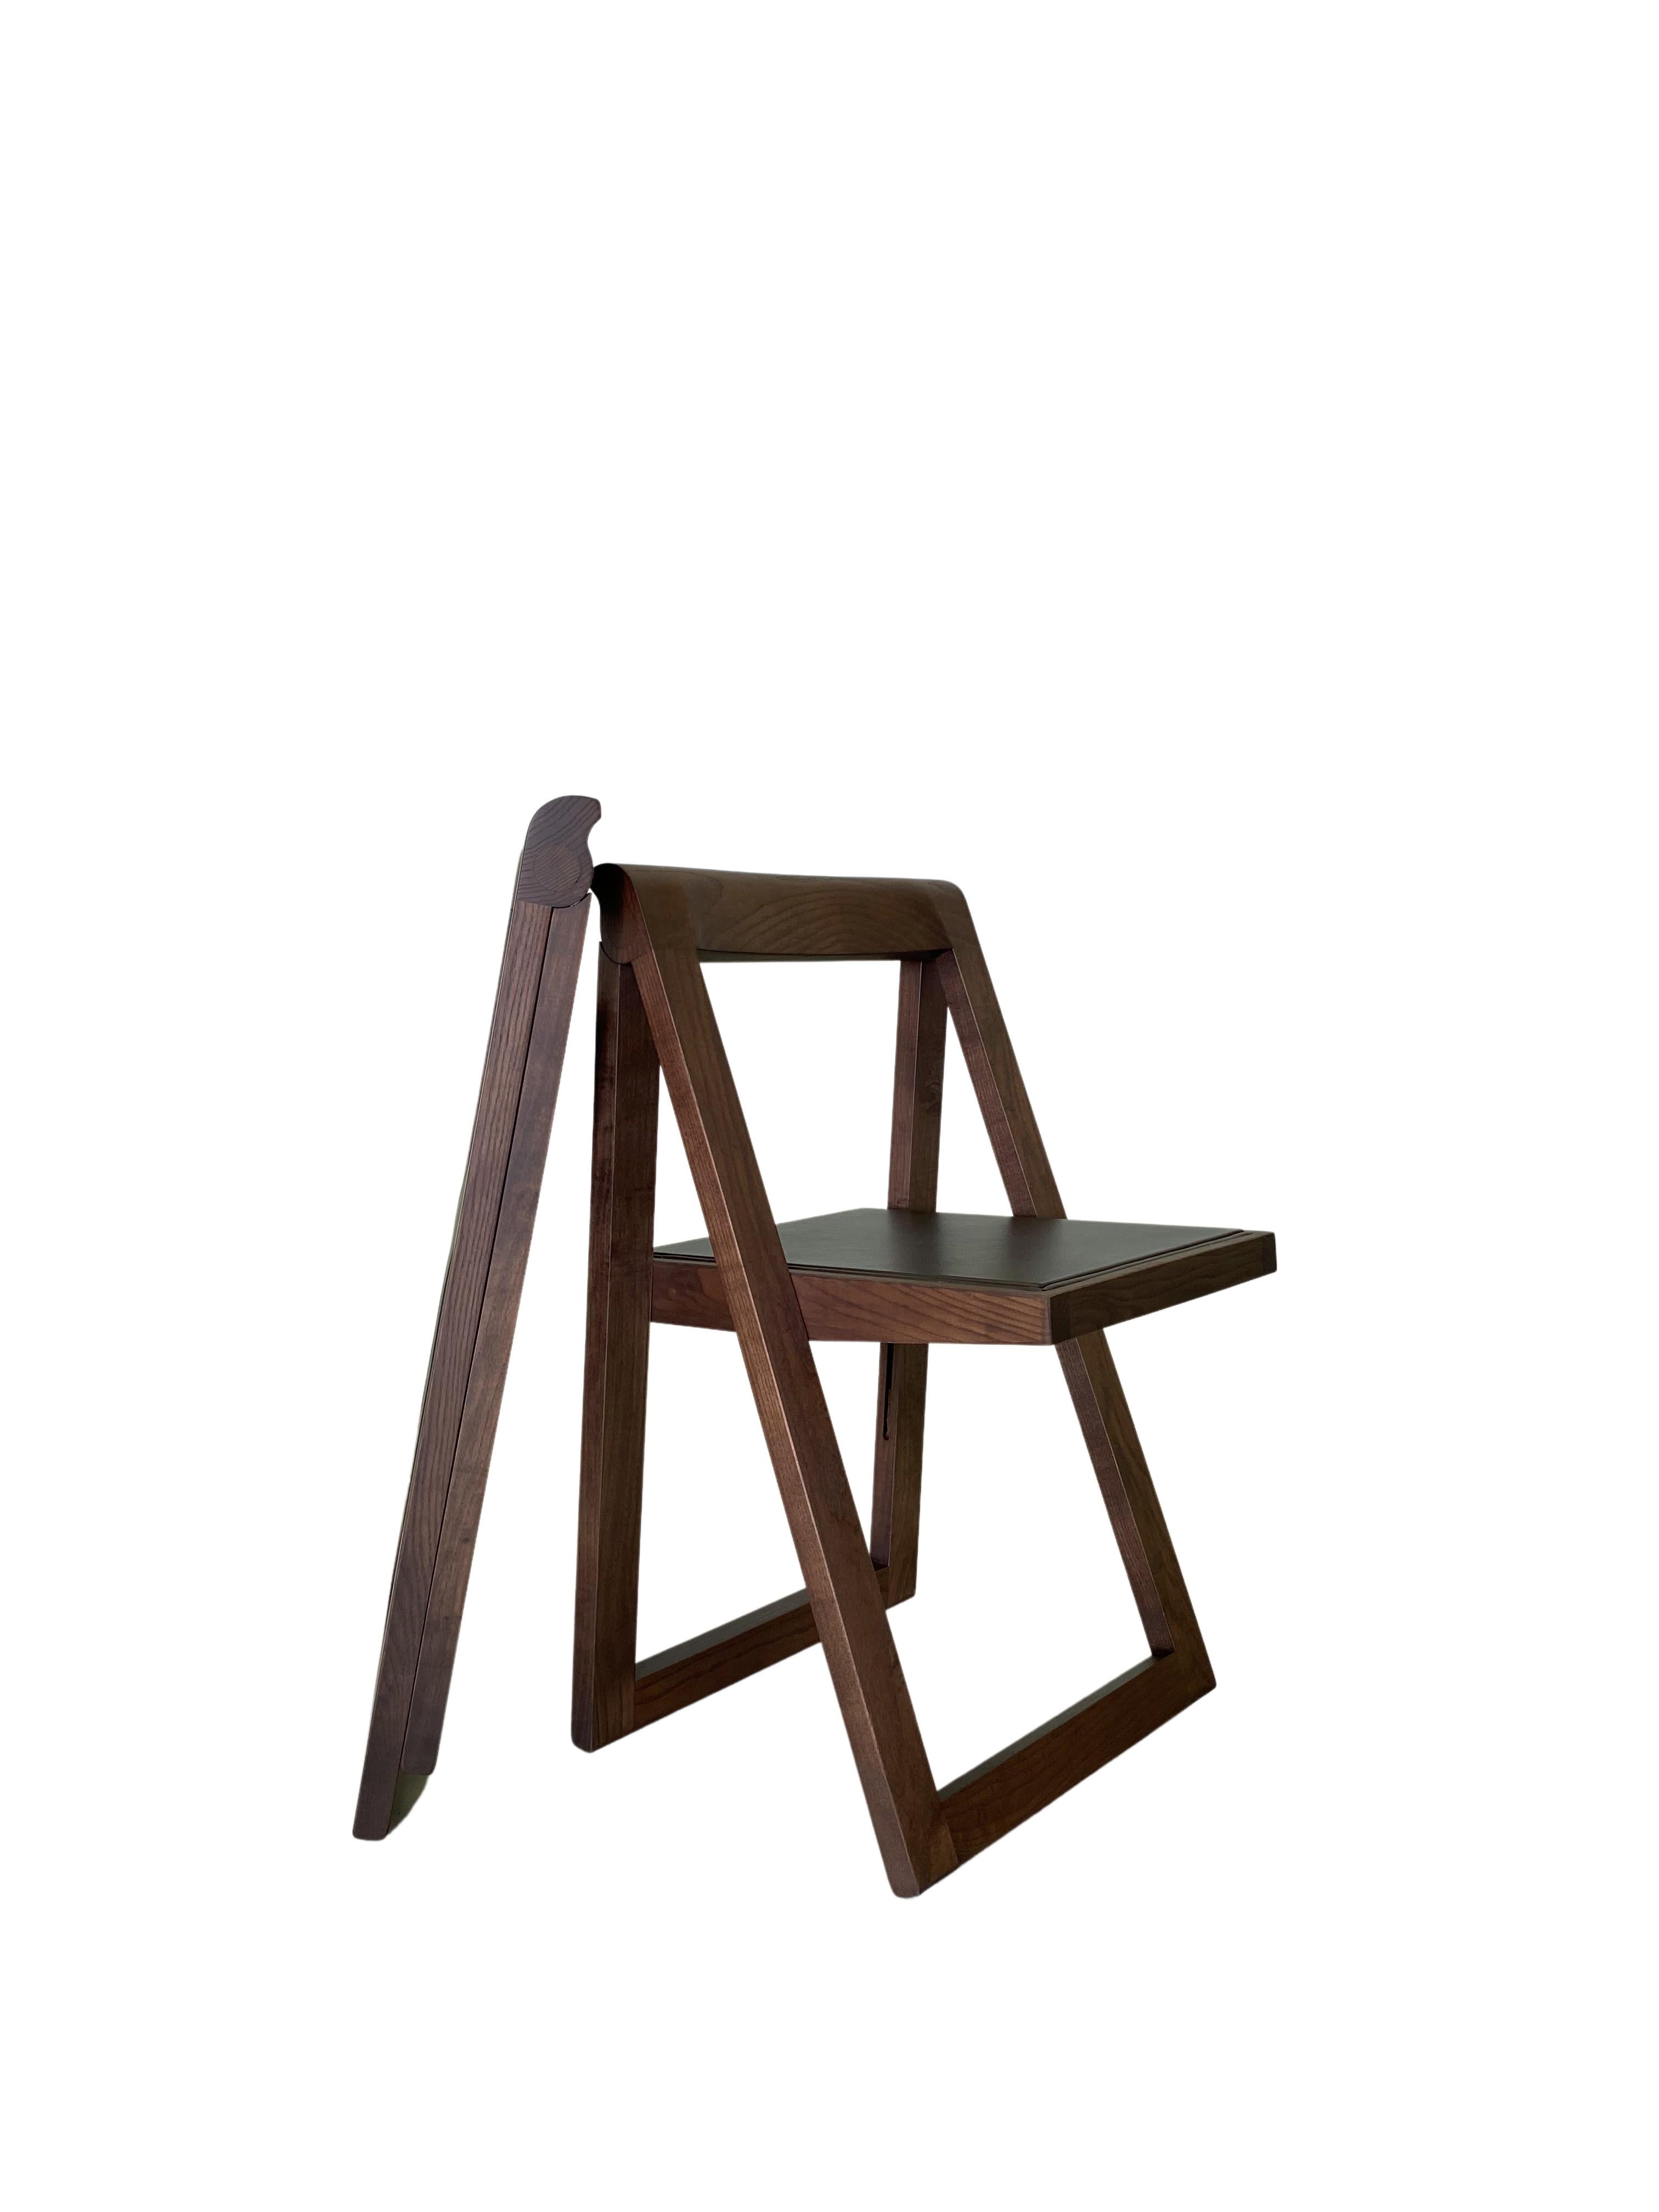 Morelato, Ciak folding Chair in Ash Wood 1